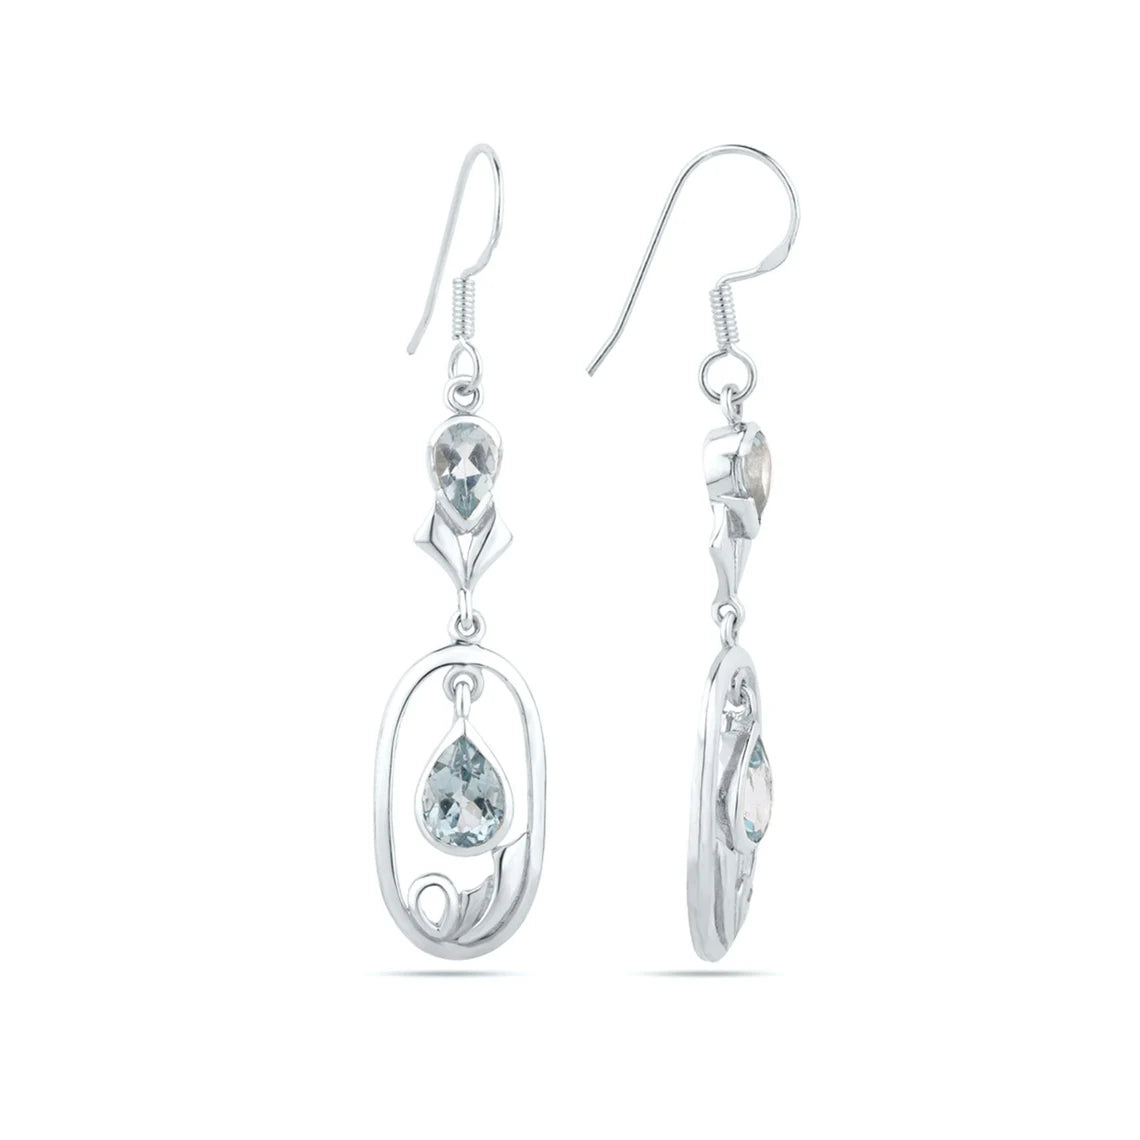 Blue Topaz Drop Earring,925 Sterling Silver,Elegant Gemstone Earring,Beautiful Design Earring,Gift For Her,Sky Blue Topaz Earring